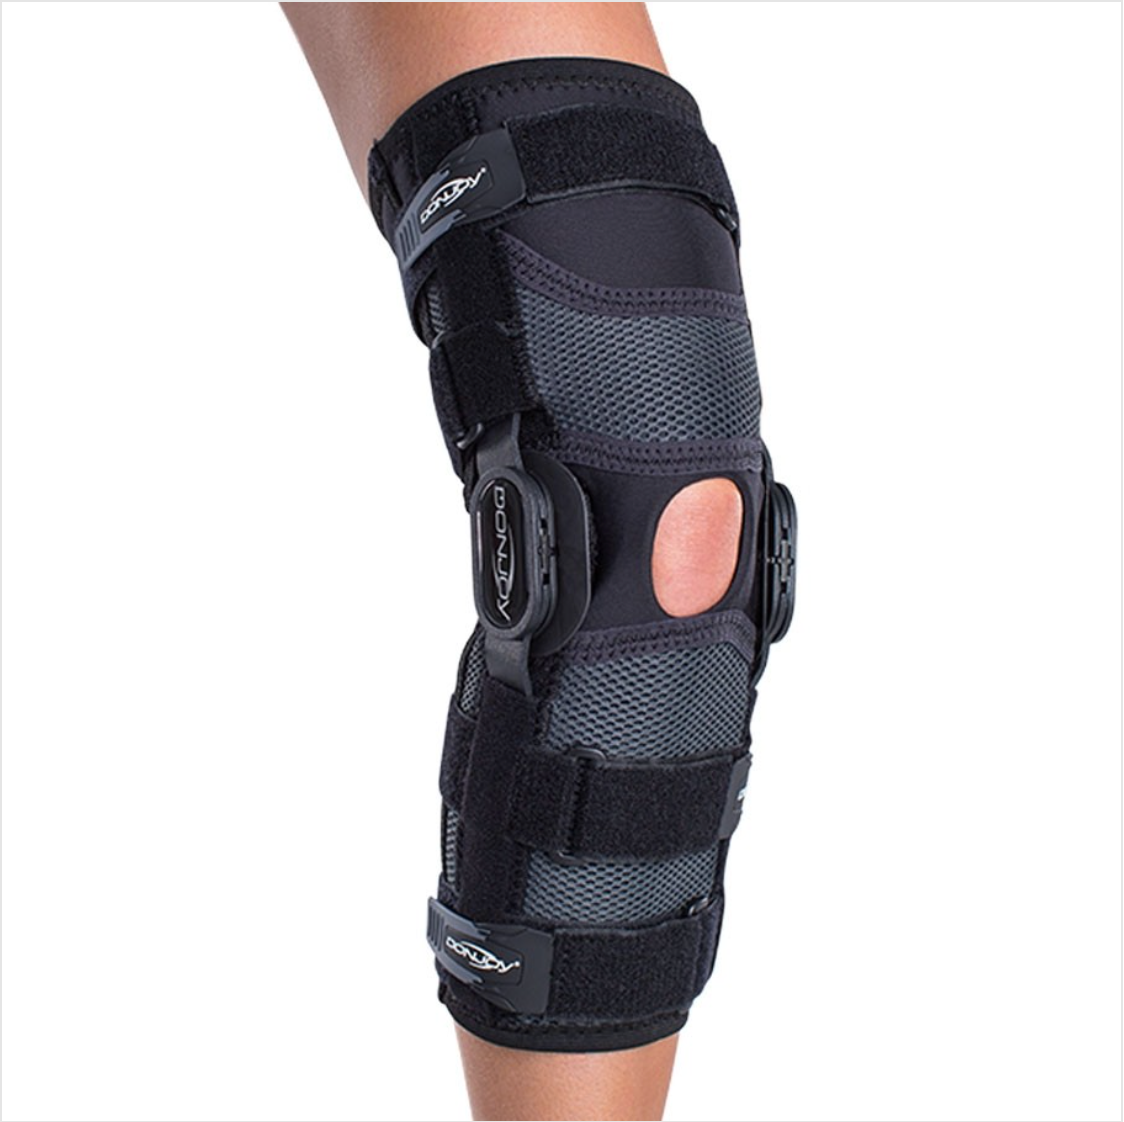 Knee Braces - Performance Healthware